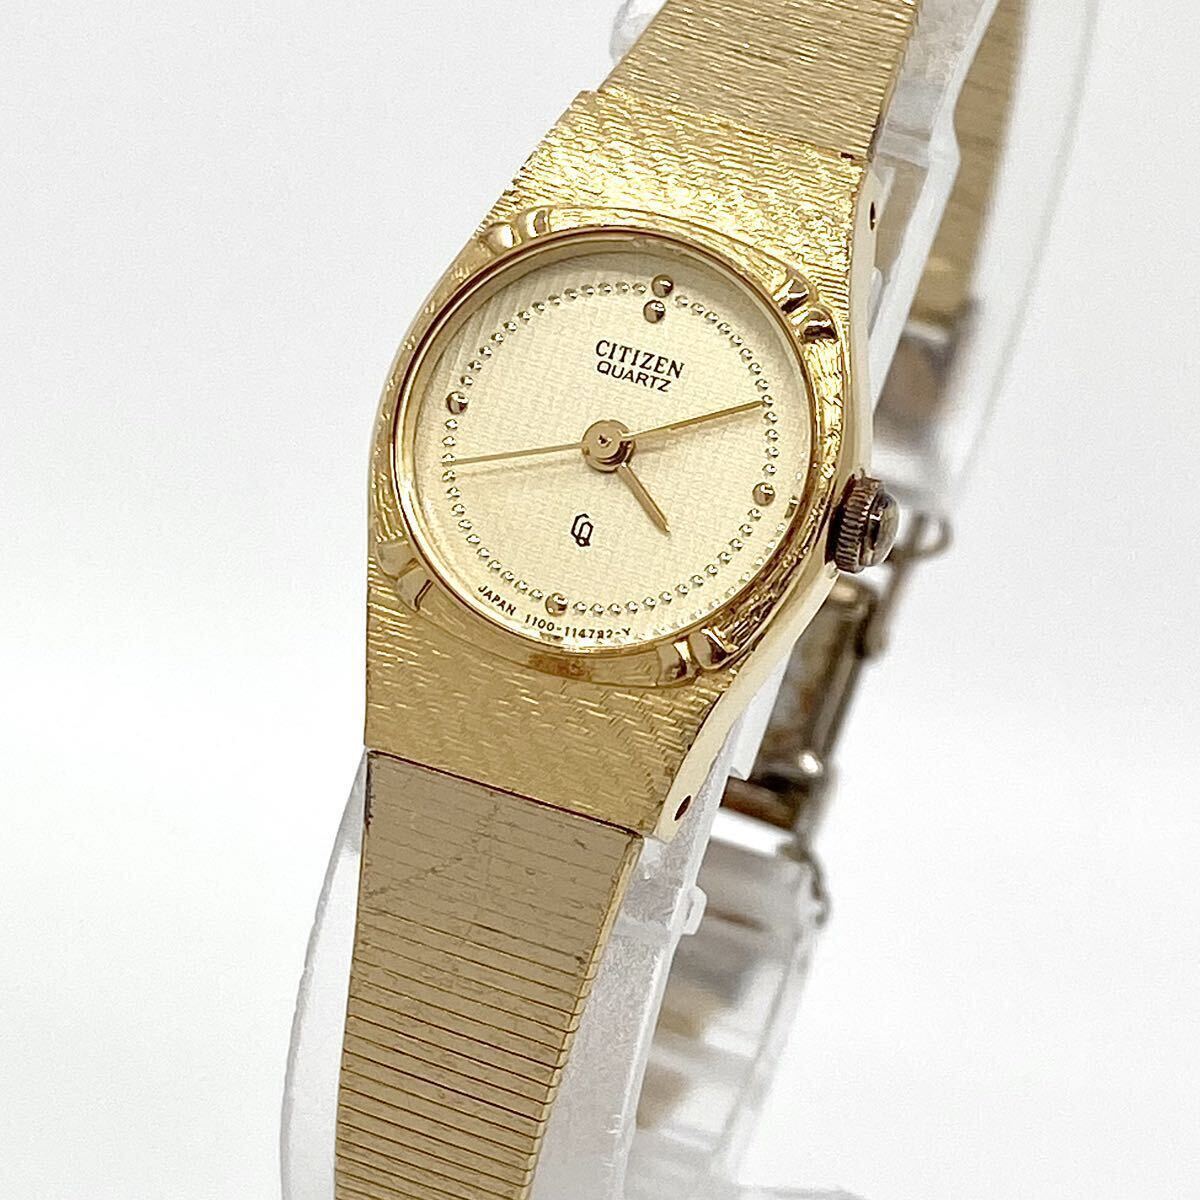 CITIZEN 腕時計 ラウンド ドットインデックス 3針 クォーツ quartz ゴールド 金 シチズン Y600_画像1